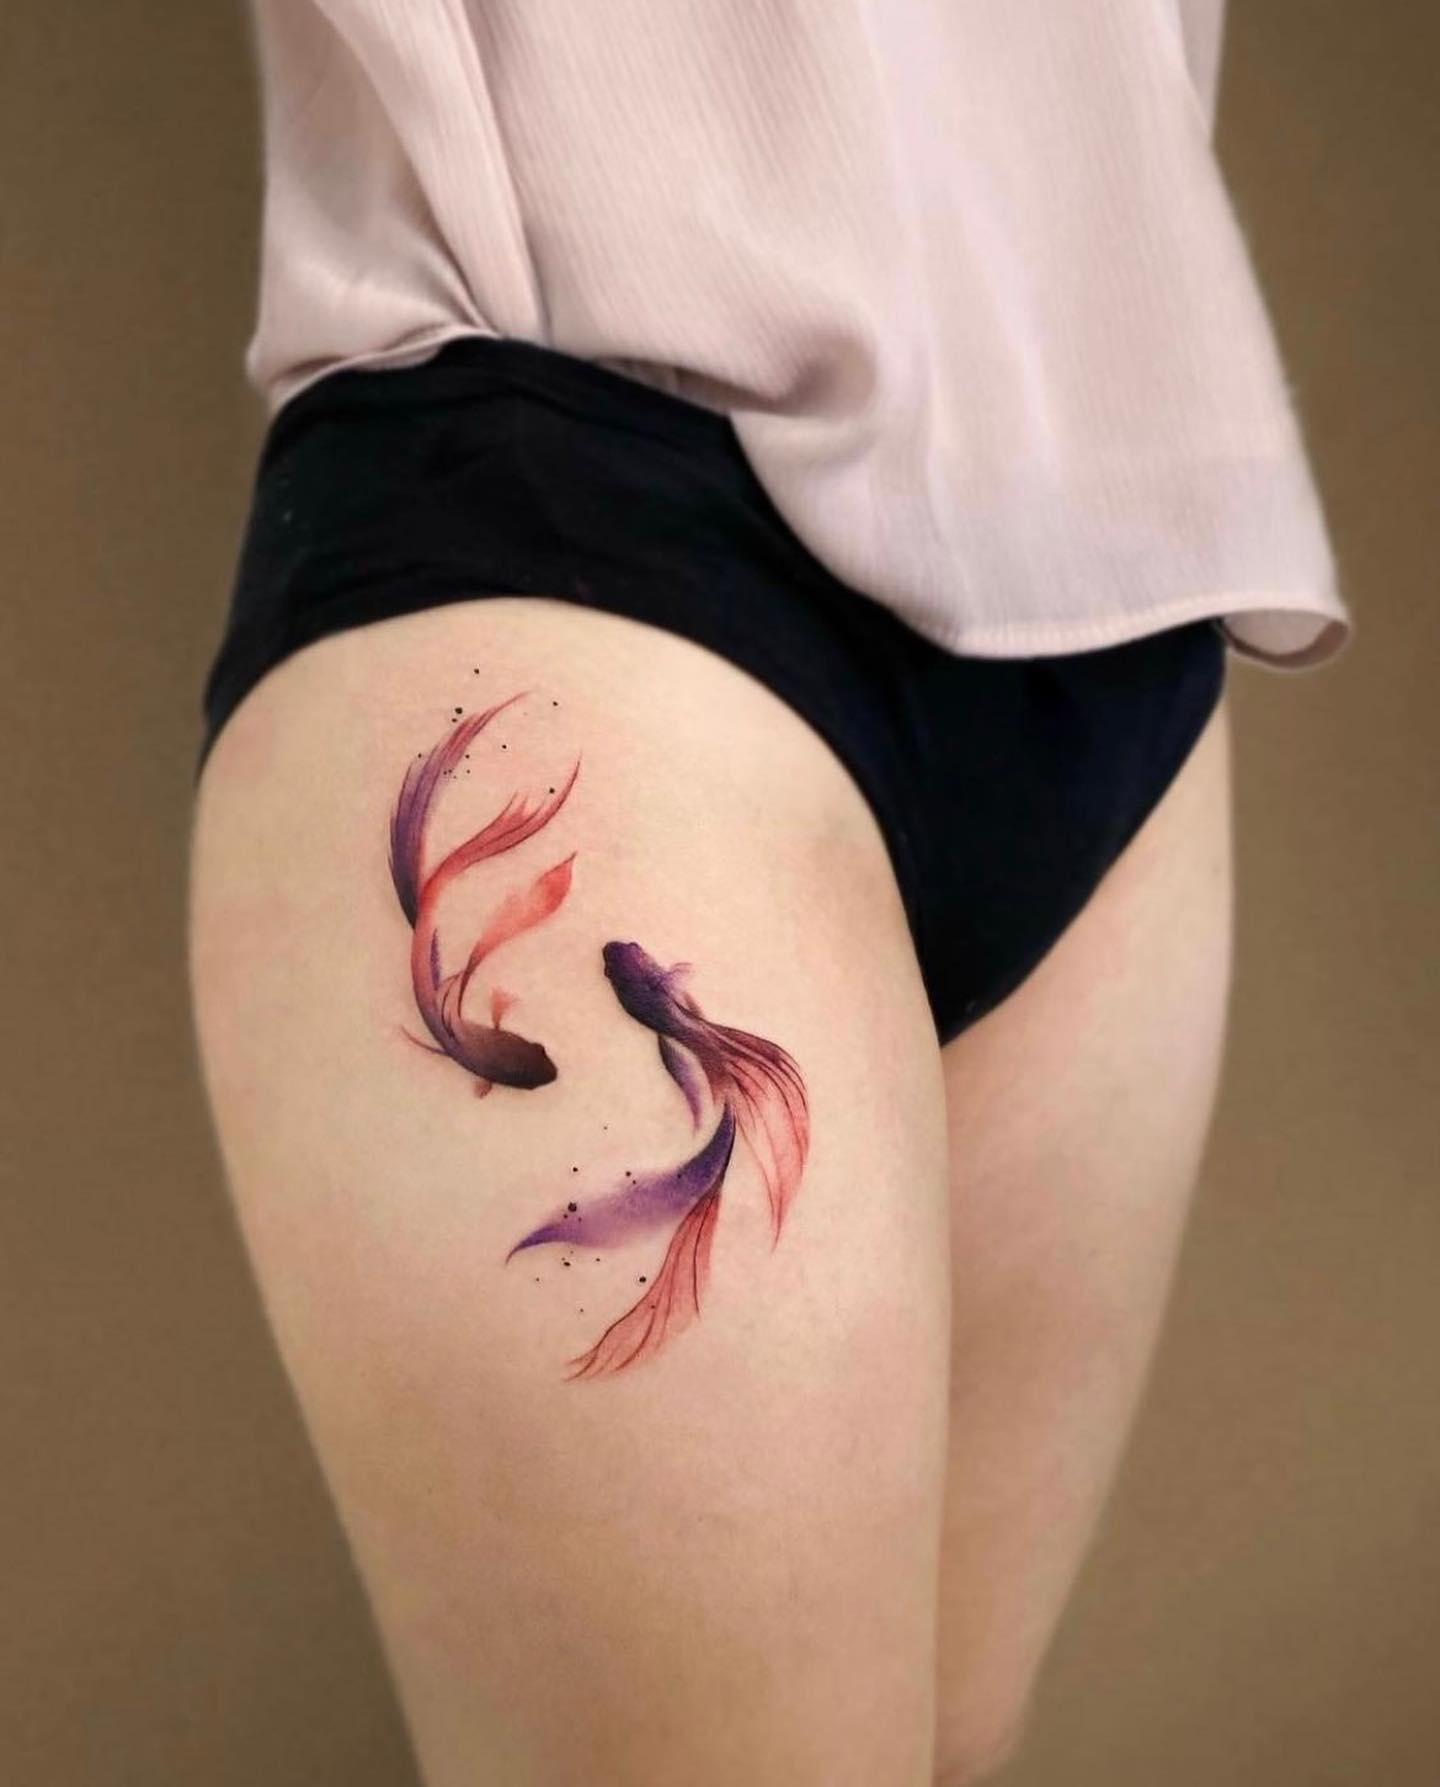 Koi Fish Tattoos  Cool Tattoo Designs Ideas  Their Meaning